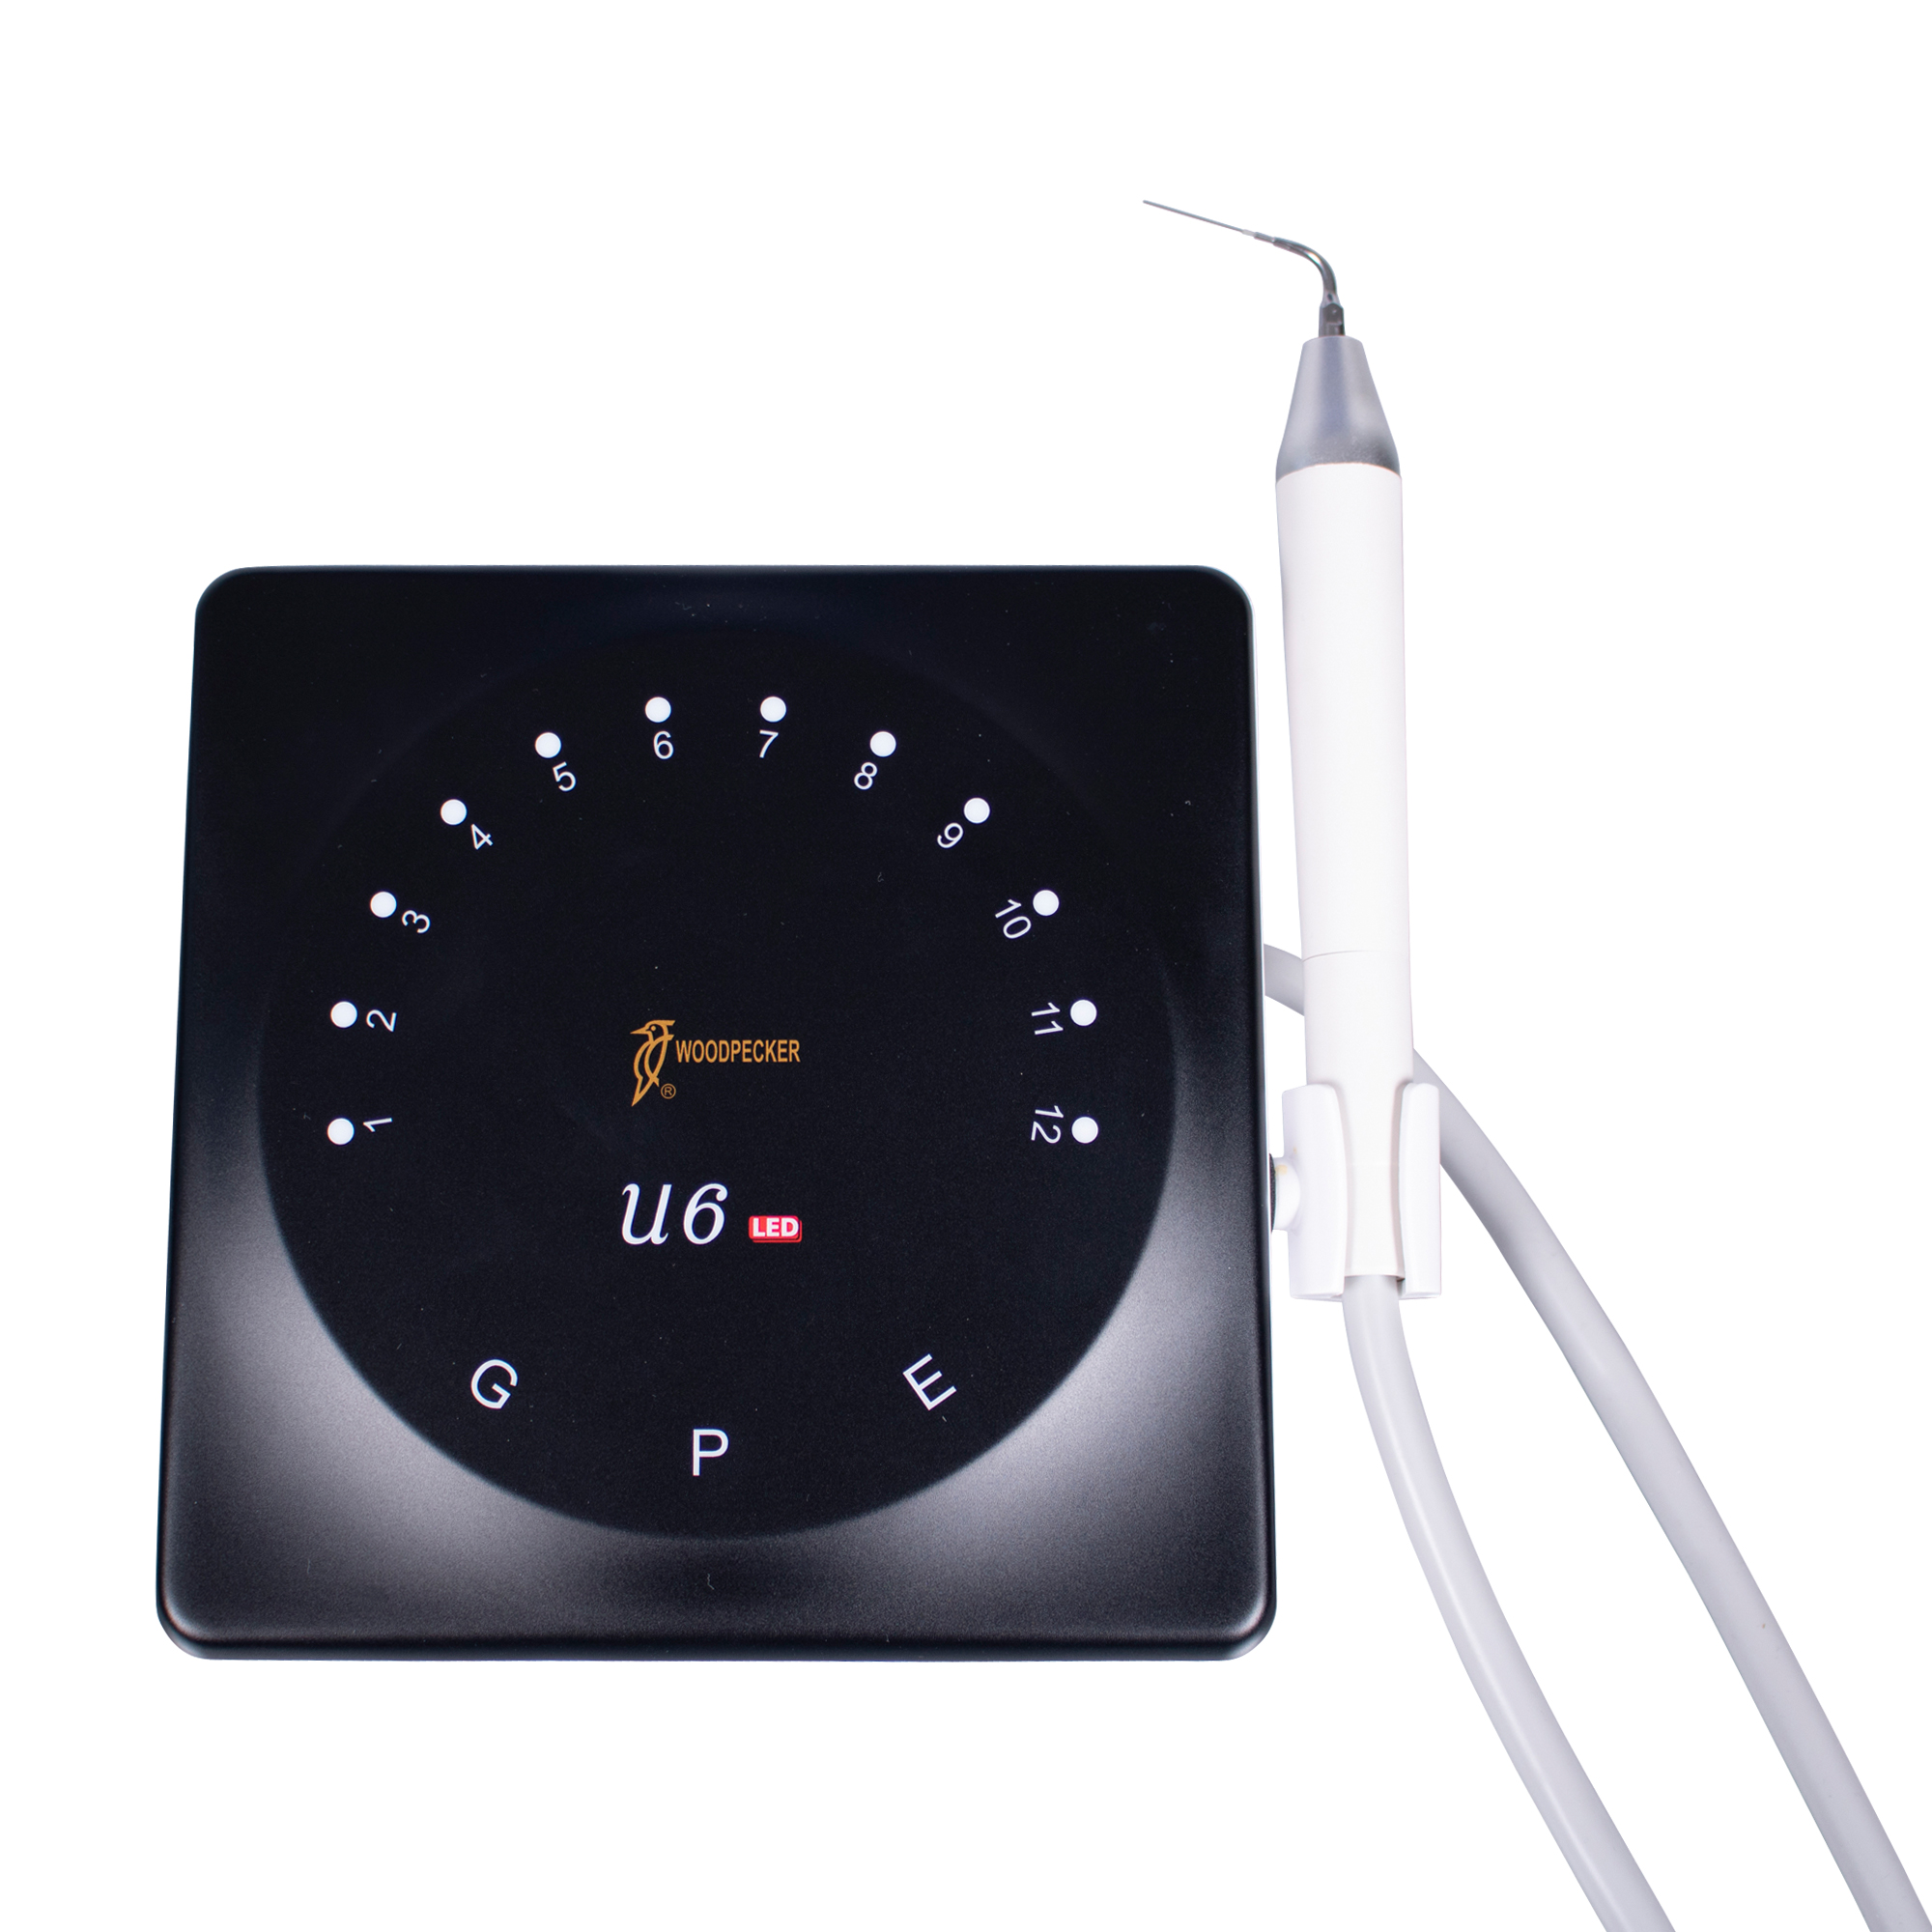 U6-LED Ultraschall-Scaler